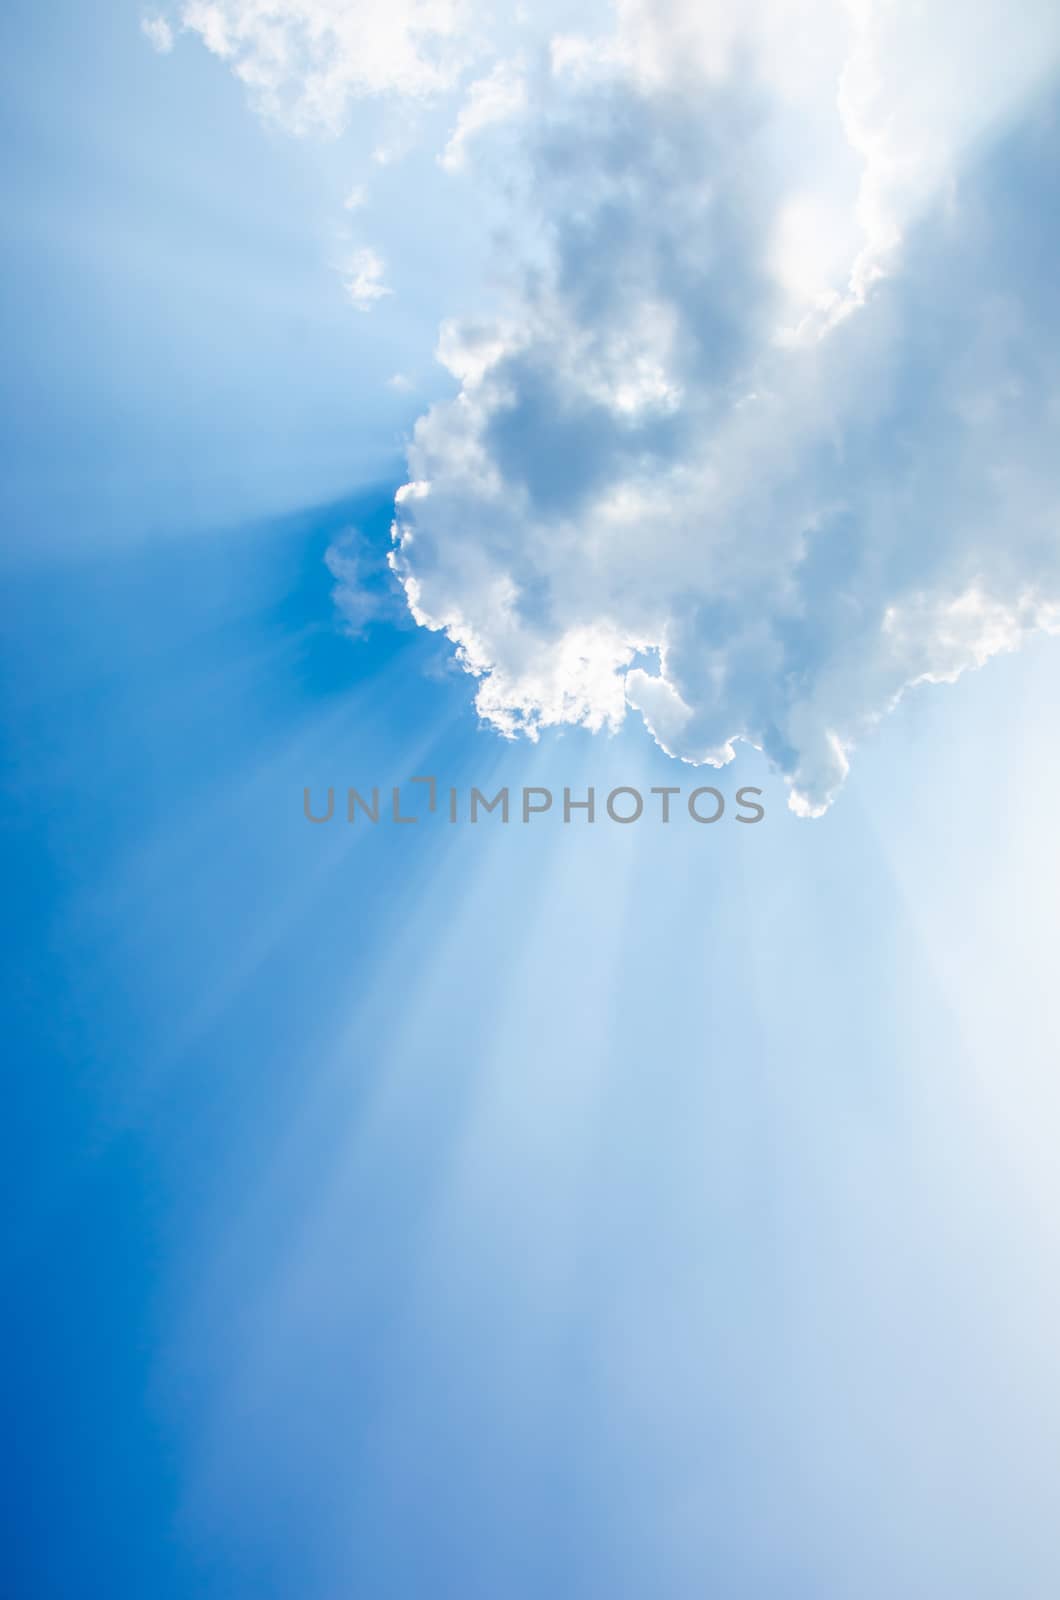 Nice sun beam shining through clouds sky by pixbox77